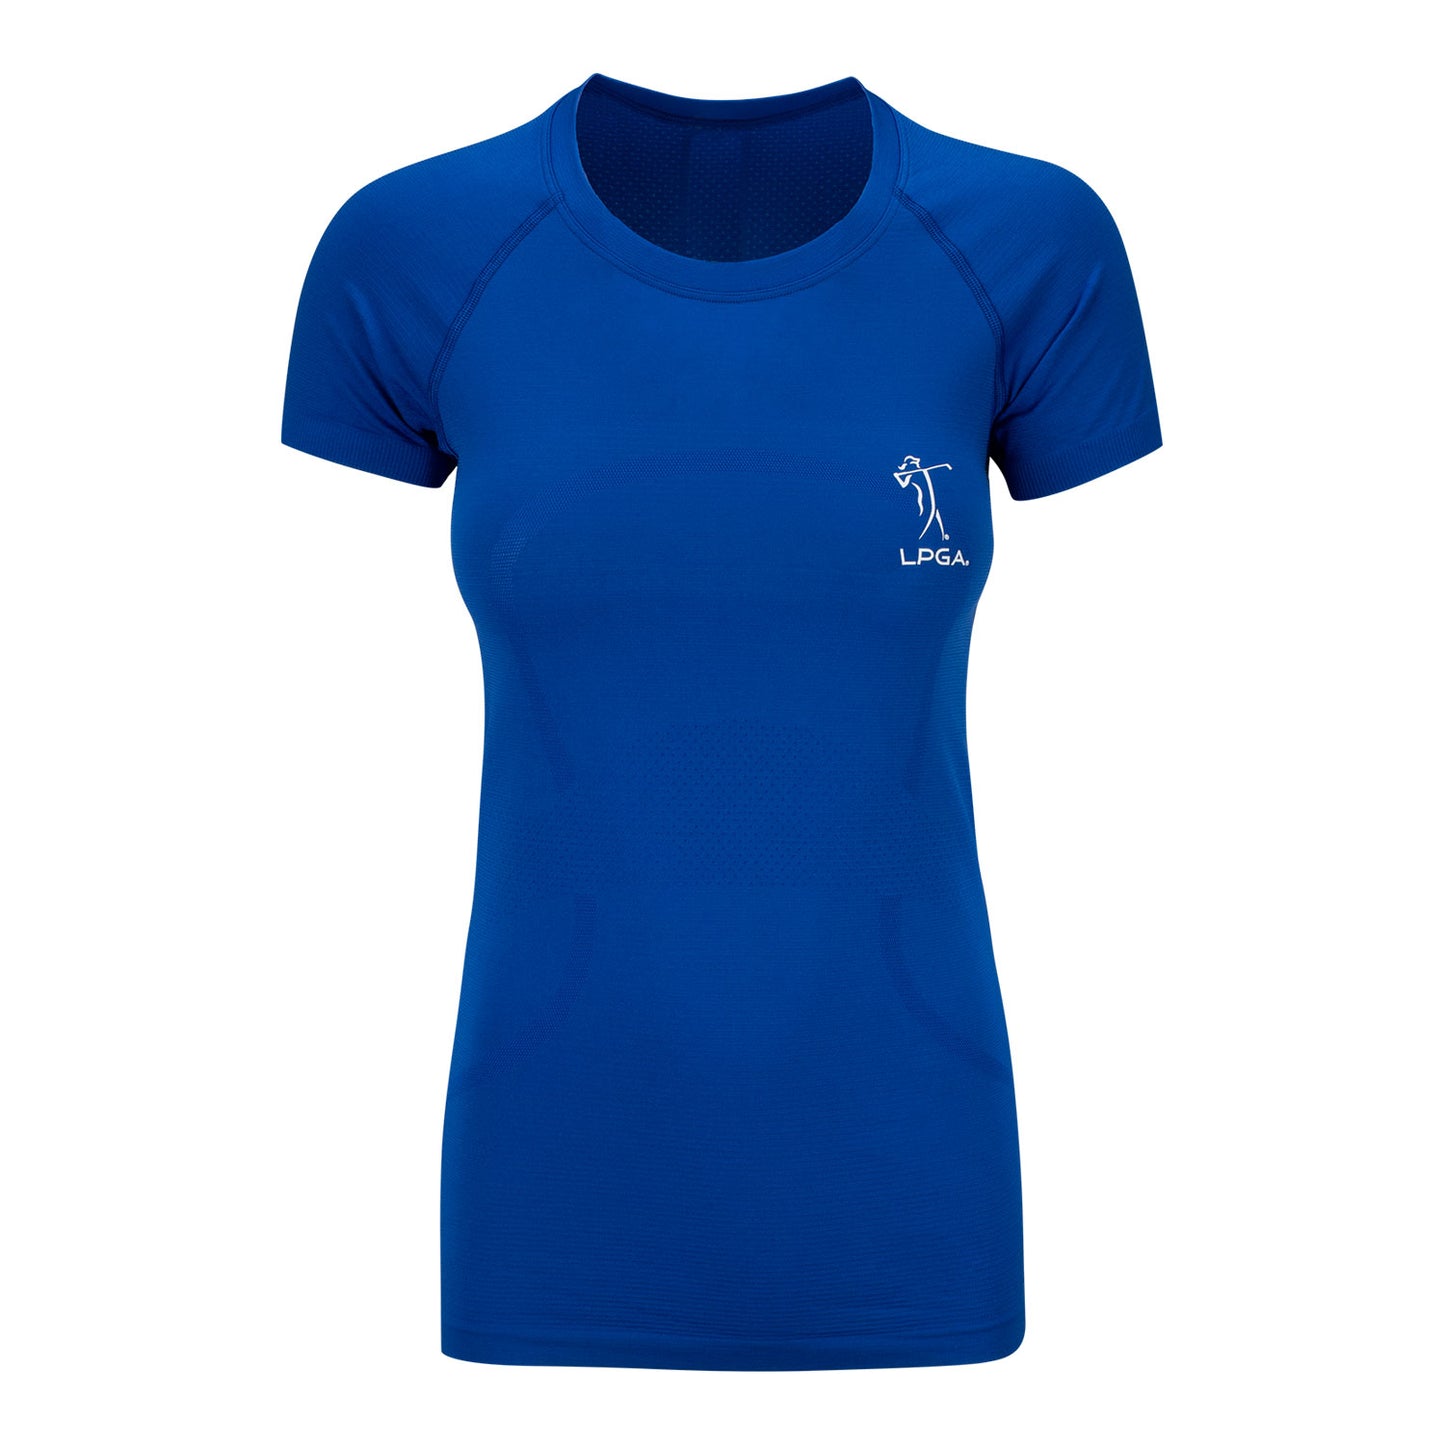 lululemon LPGA Women's Swiftly Tech Short Sleeve T-Shirt in Symphony - Front View